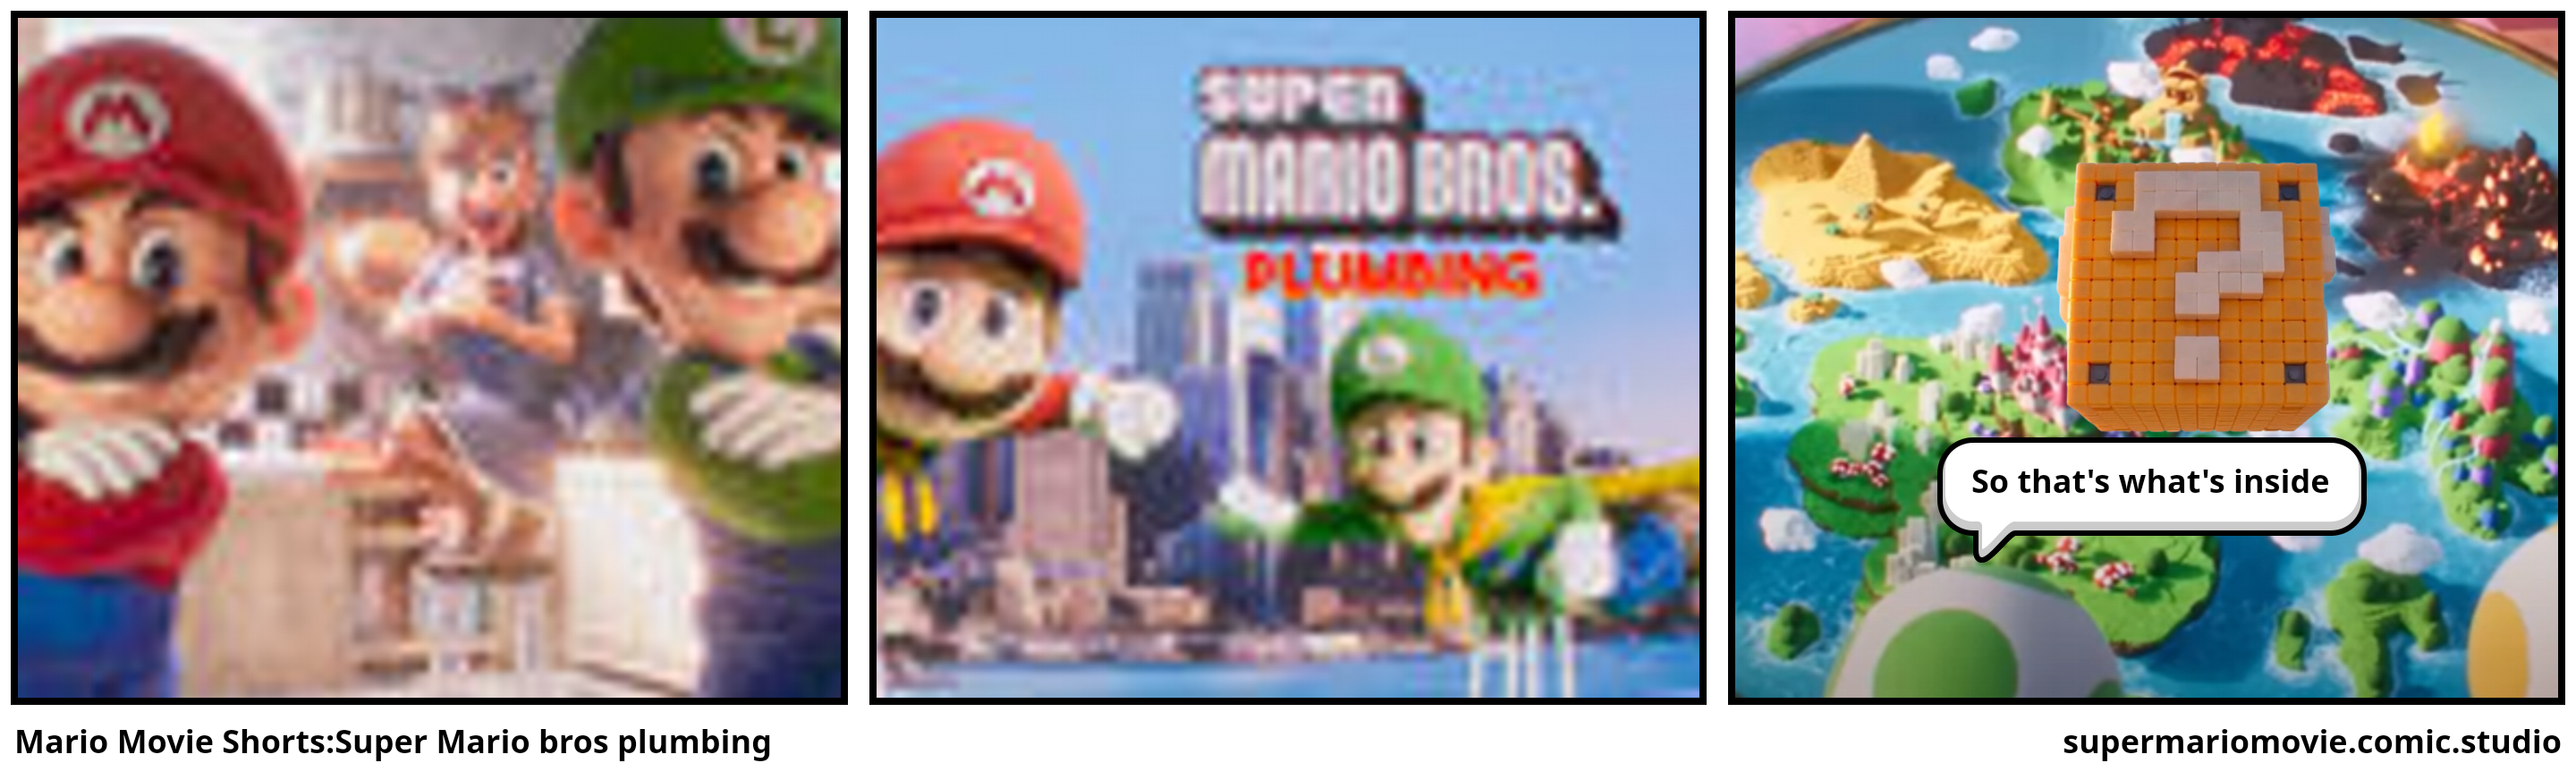 Mario Movie Shorts:Super Mario bros plumbing